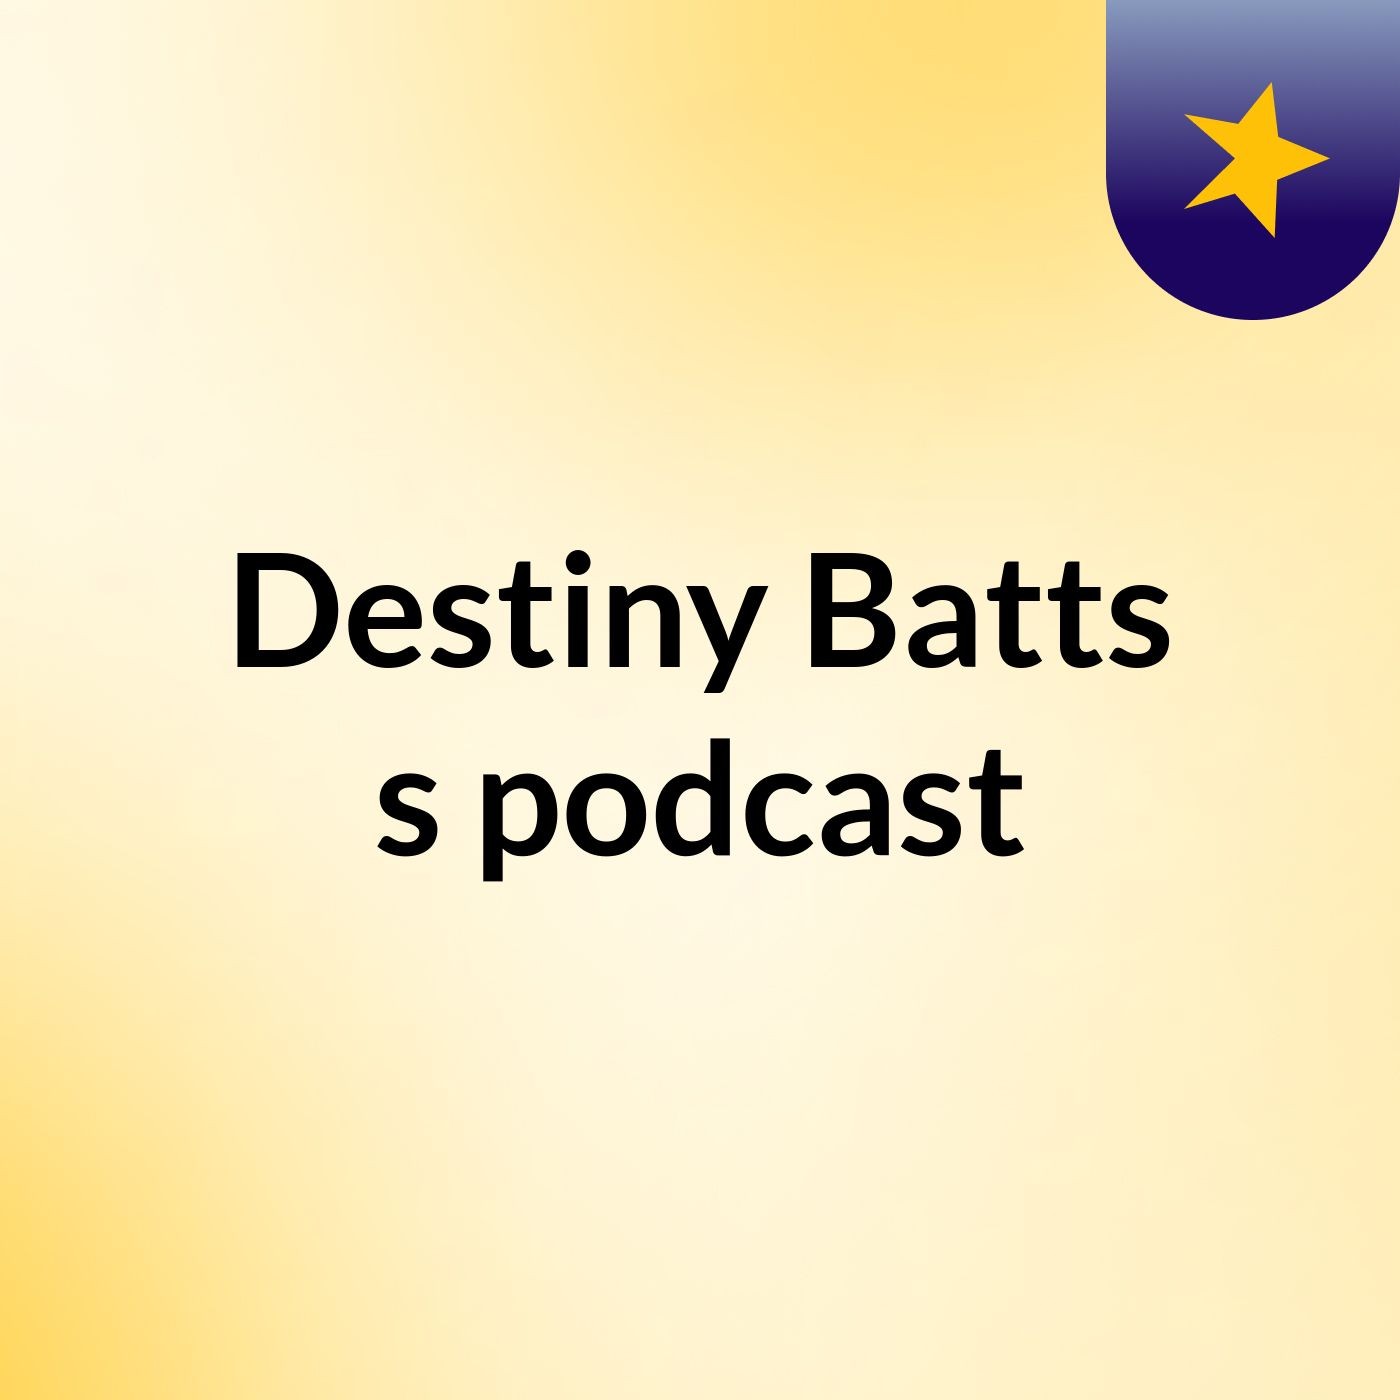 Destiny Batts's podcast